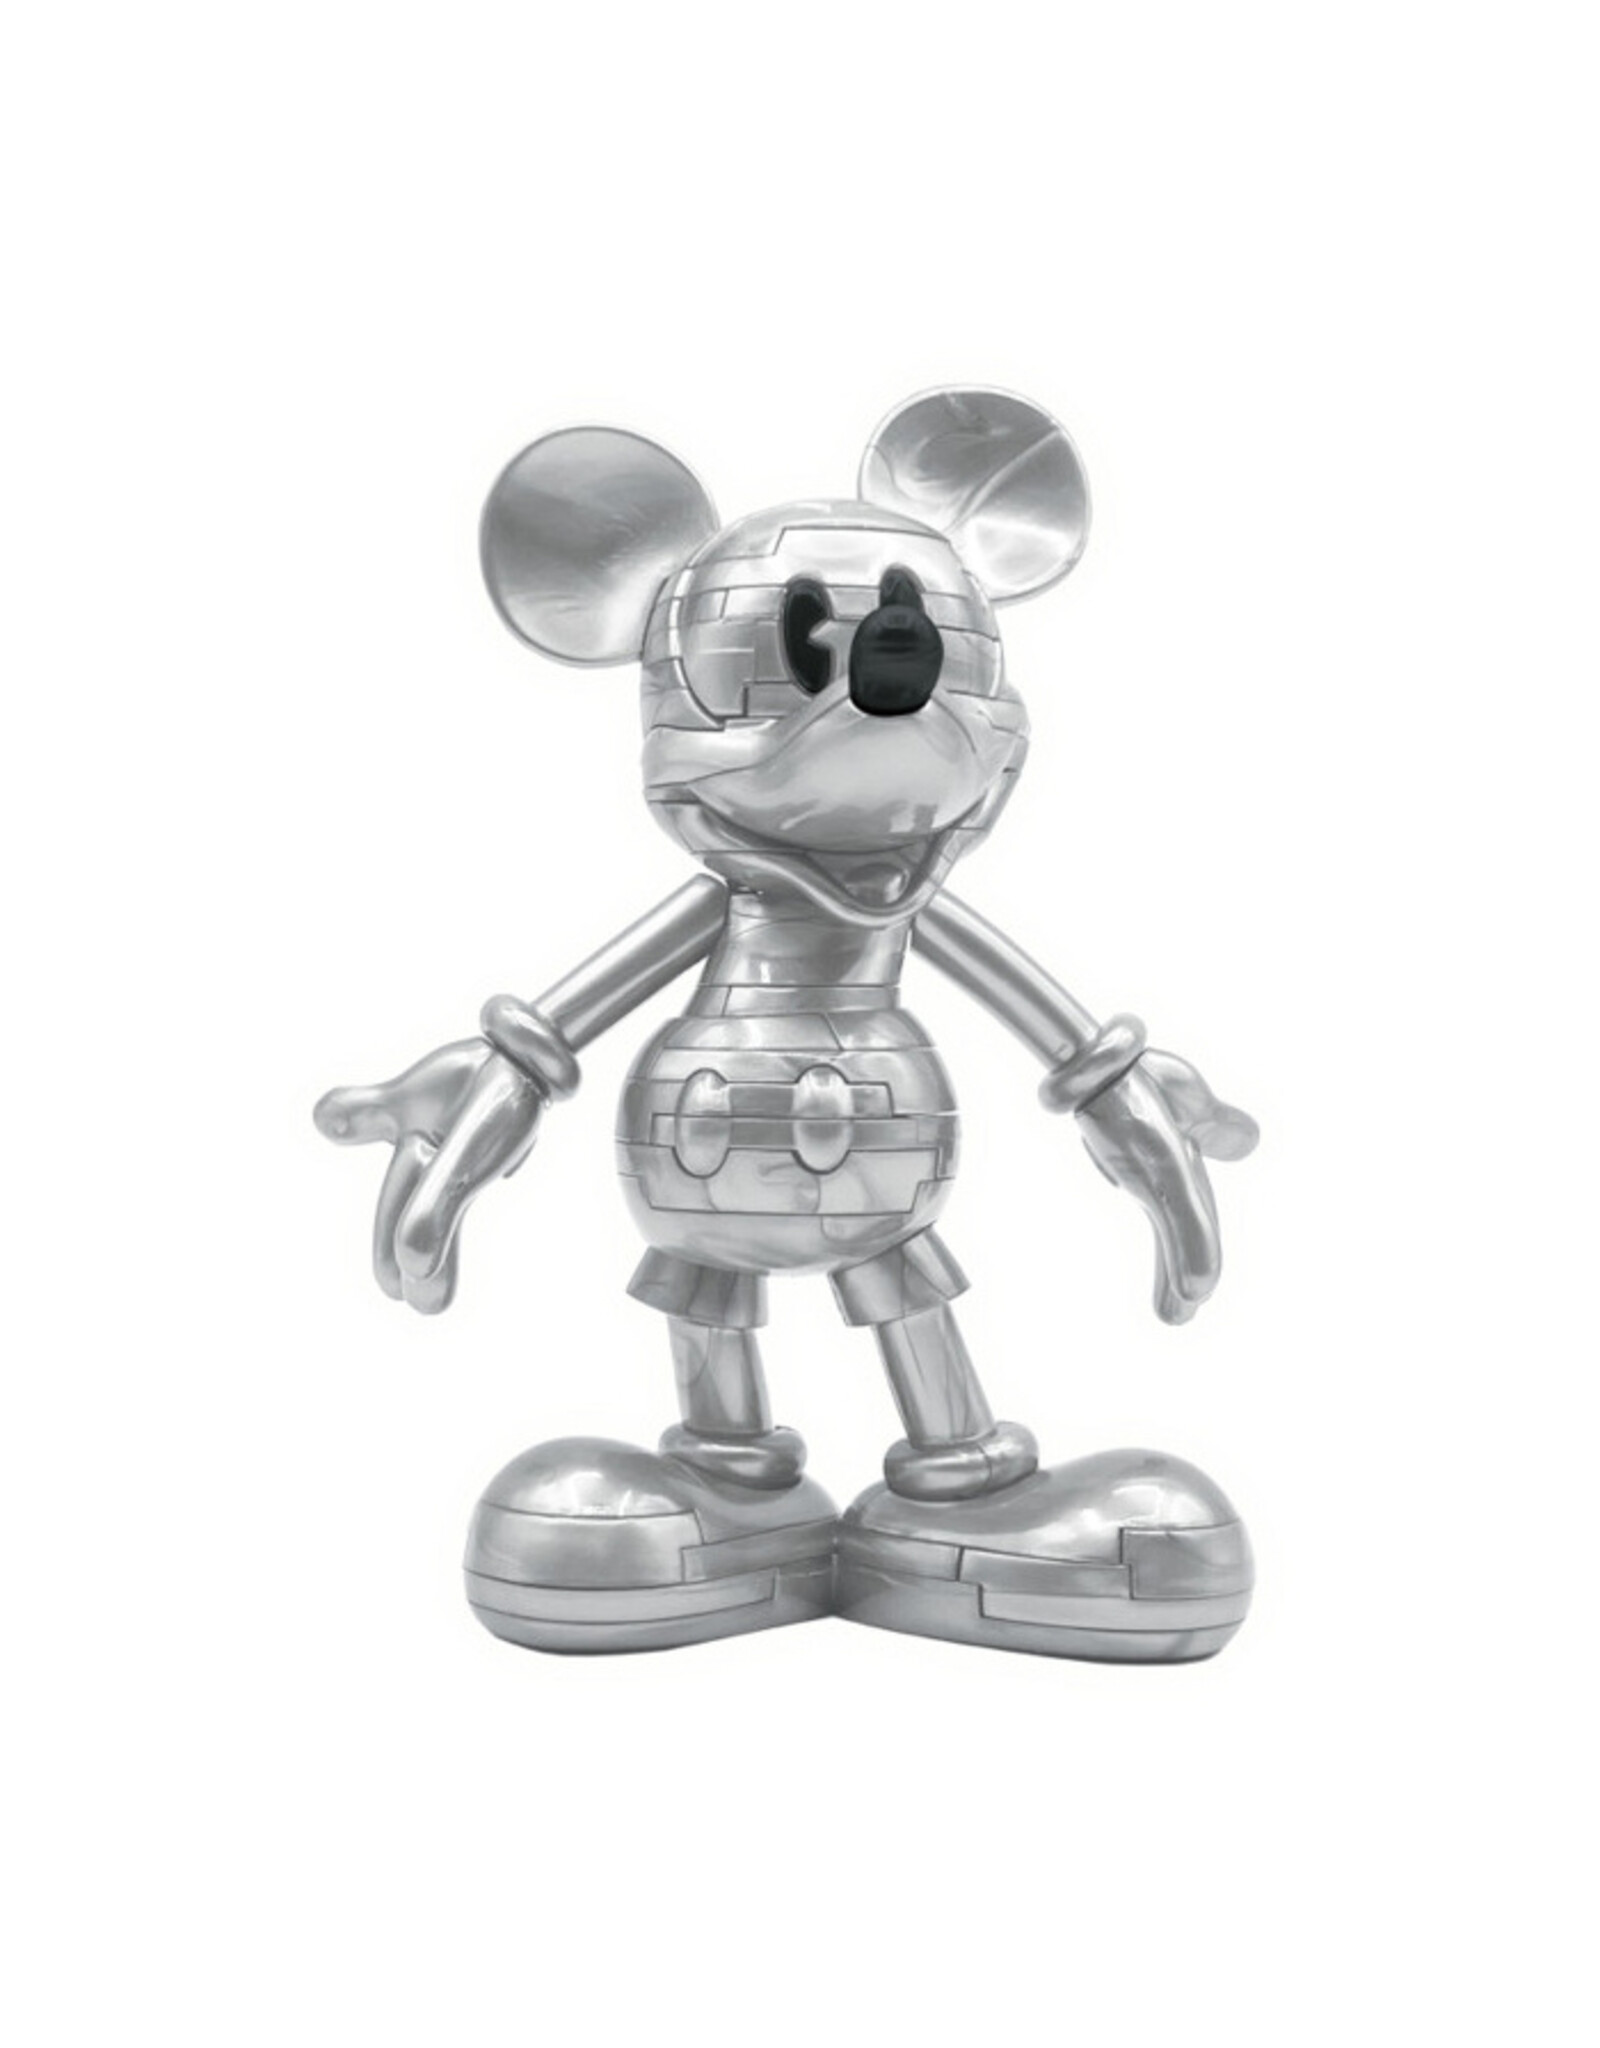 Hanayama Puzzle: 3D Crystal: Disney 100 Mickey Mouse